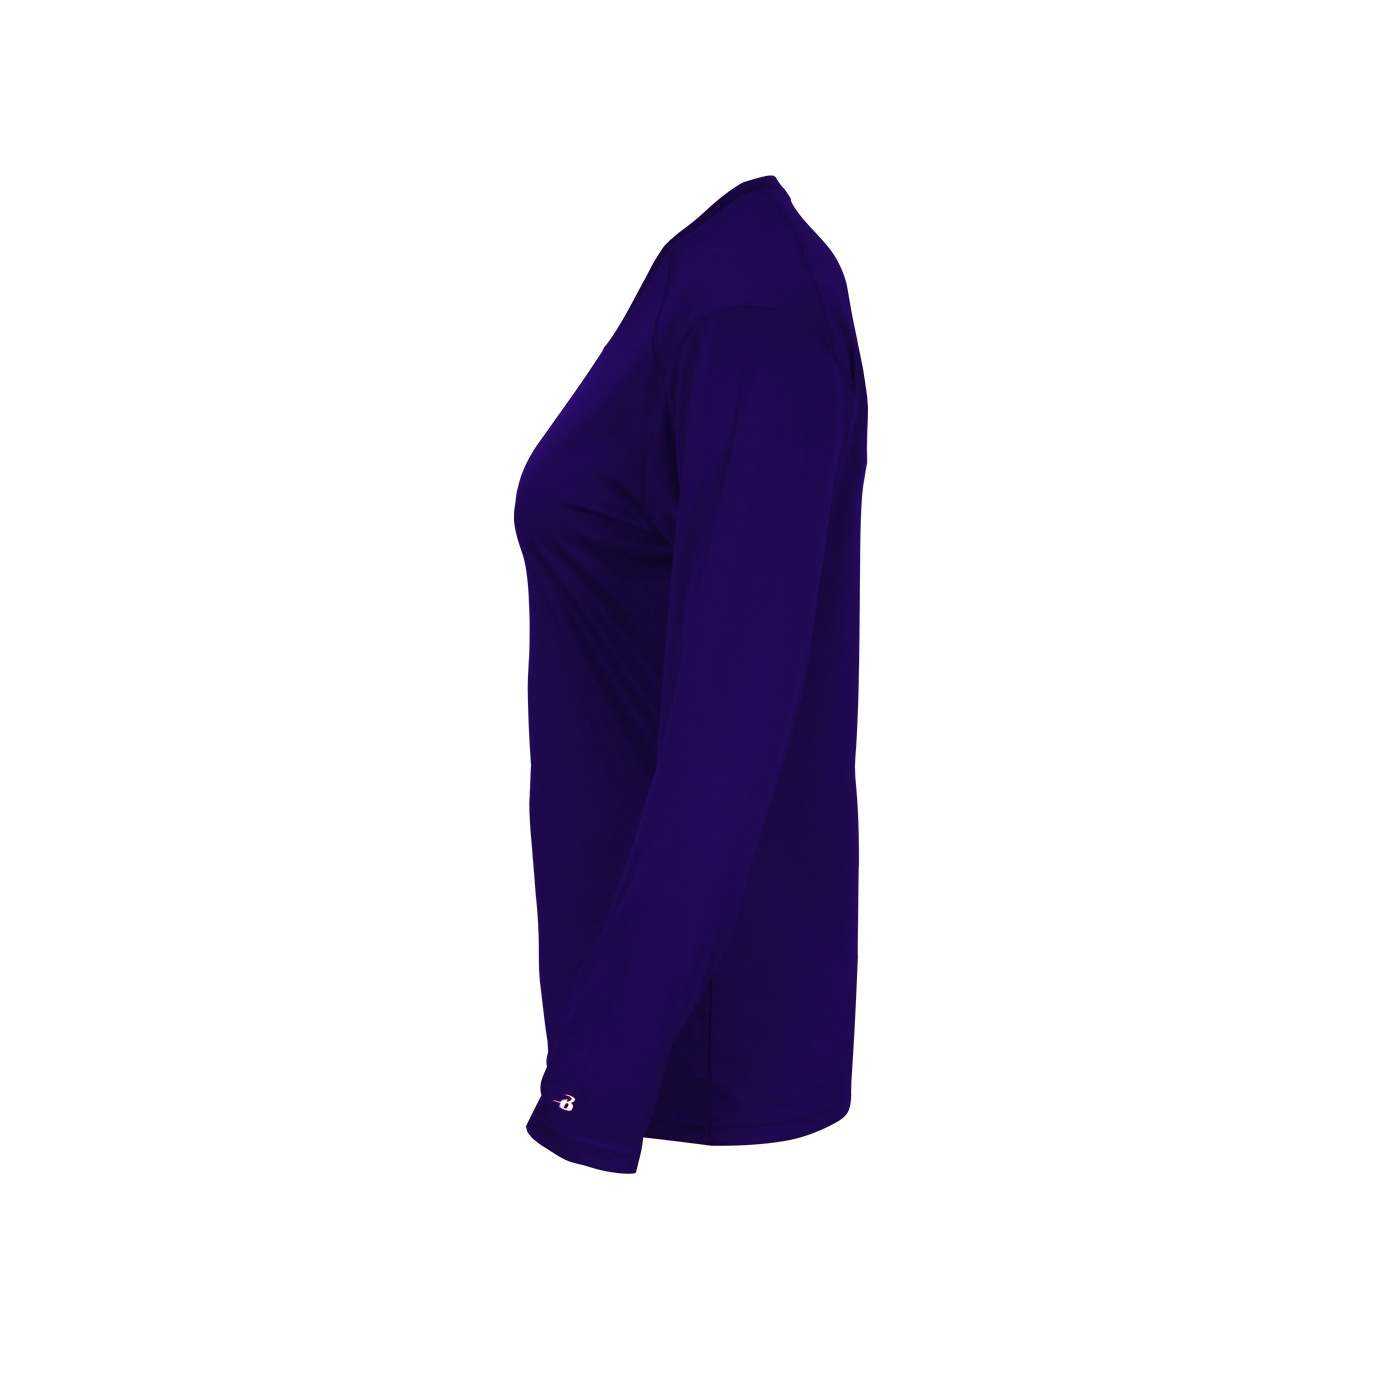 Badger Sport 4064 Ultimate Softlock V-neck Ladies Long Sleeve Tee - Purple - HIT a Double - 1